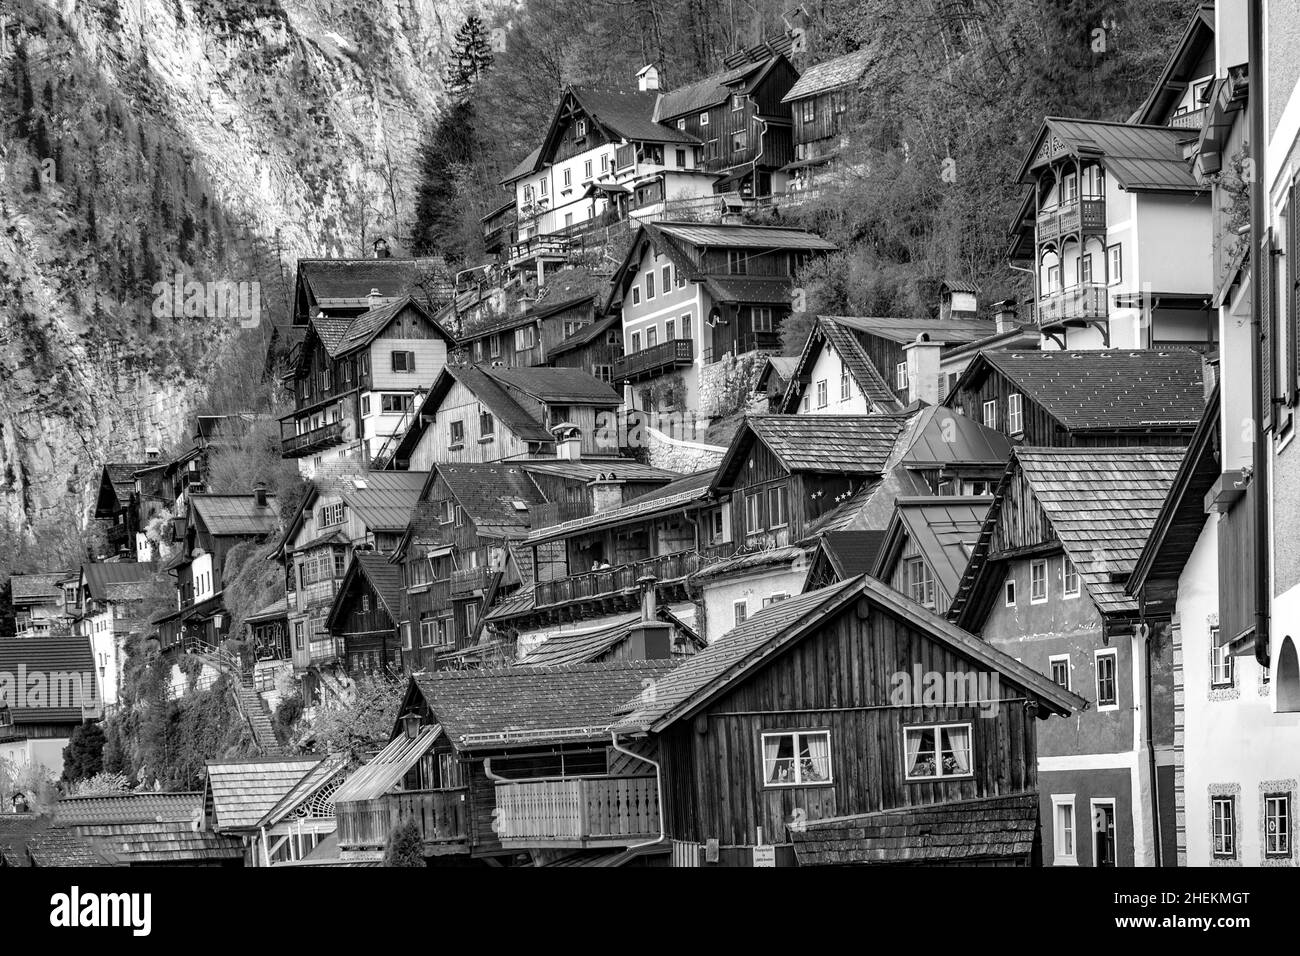 Austria old village Black and White Stock Photos & Images - Alamy